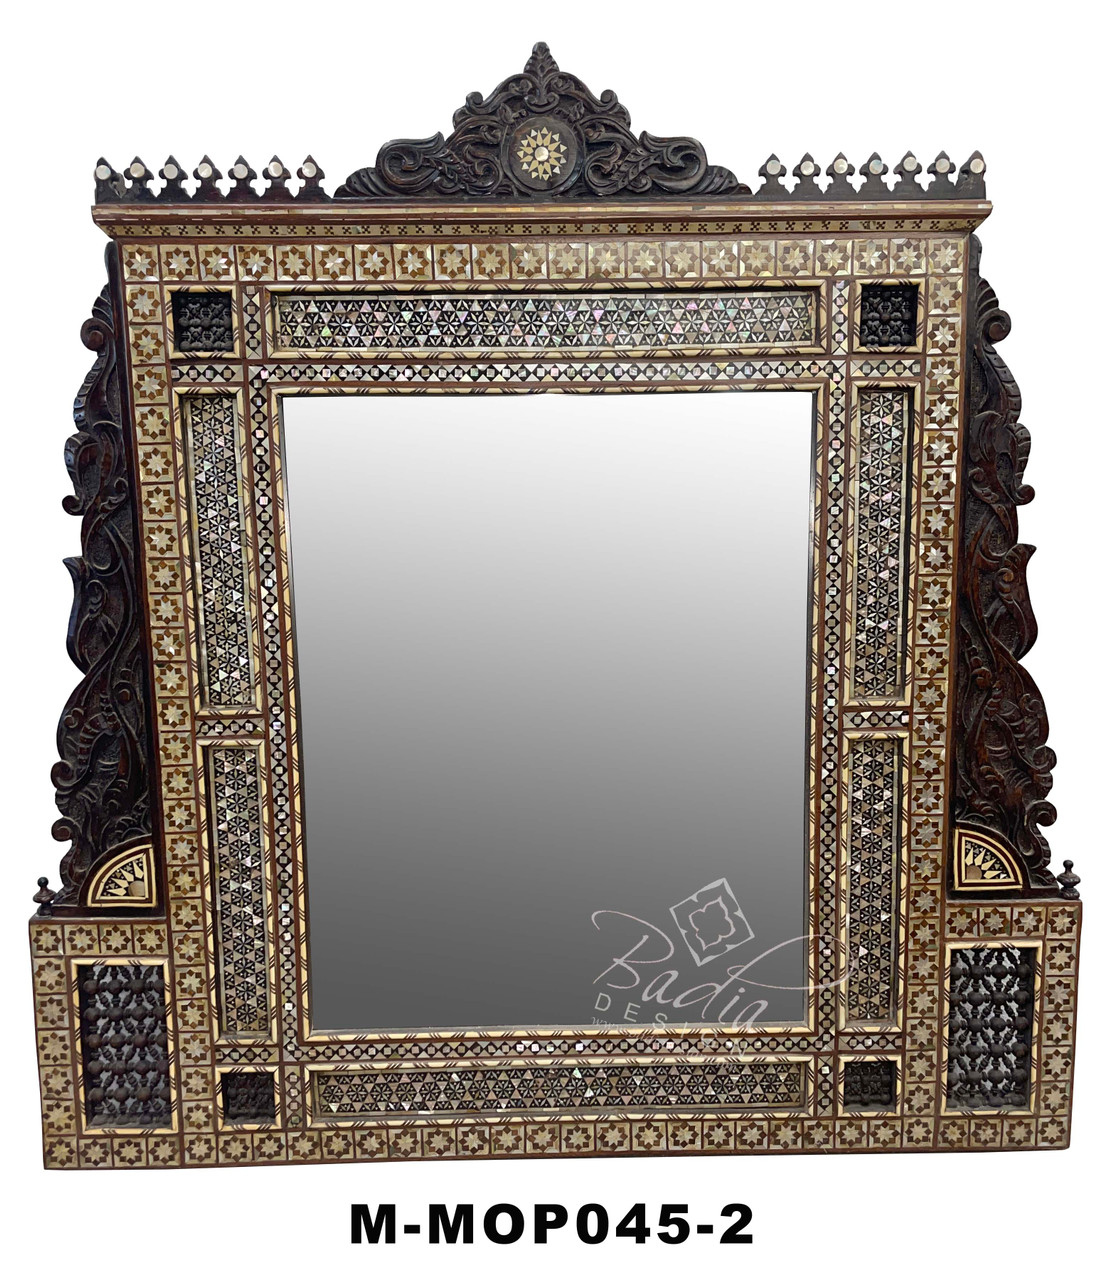 Syrian Style Inlay Mirror - M-MOP045